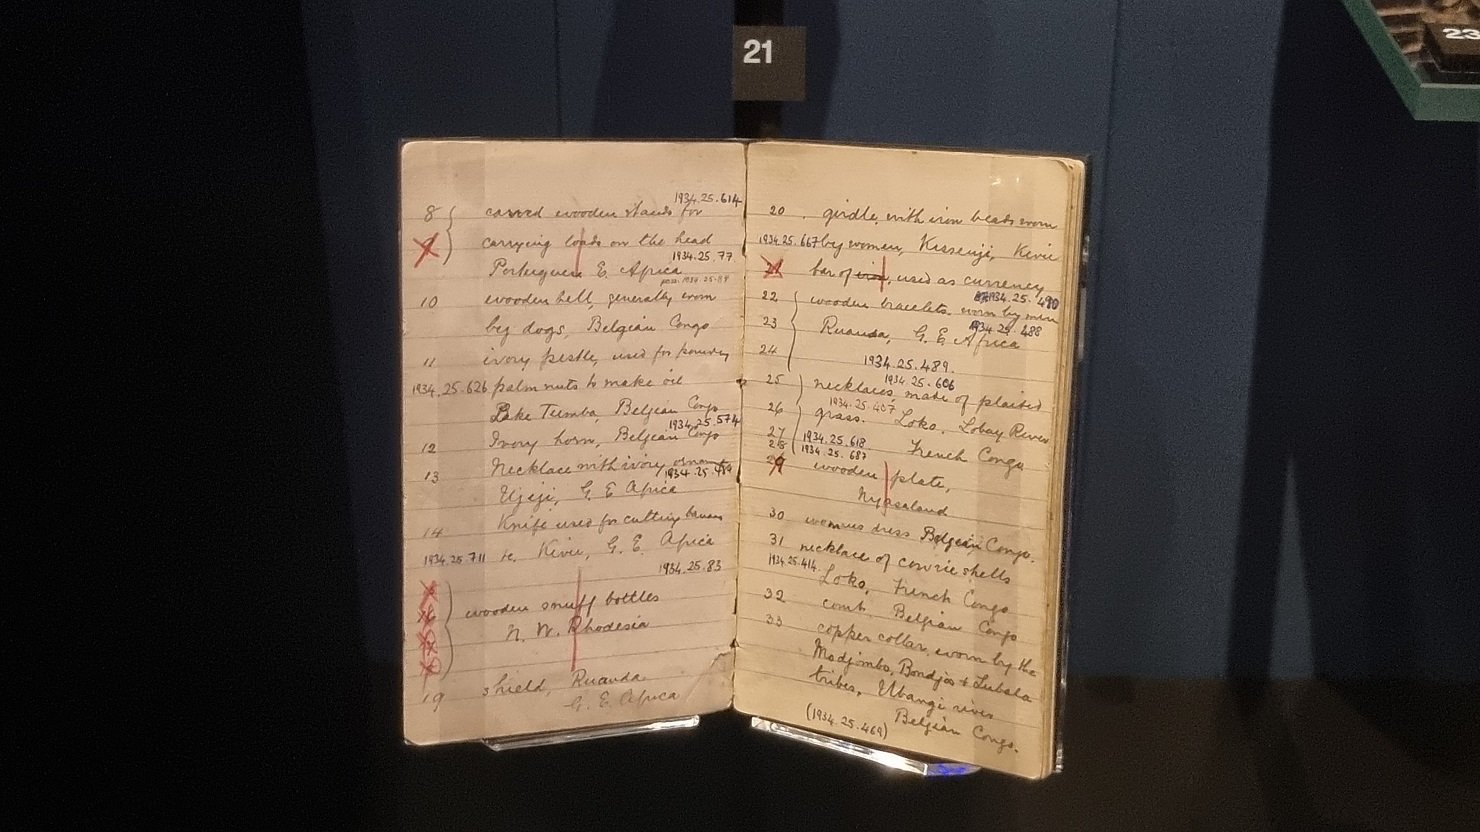 Benham's notebook